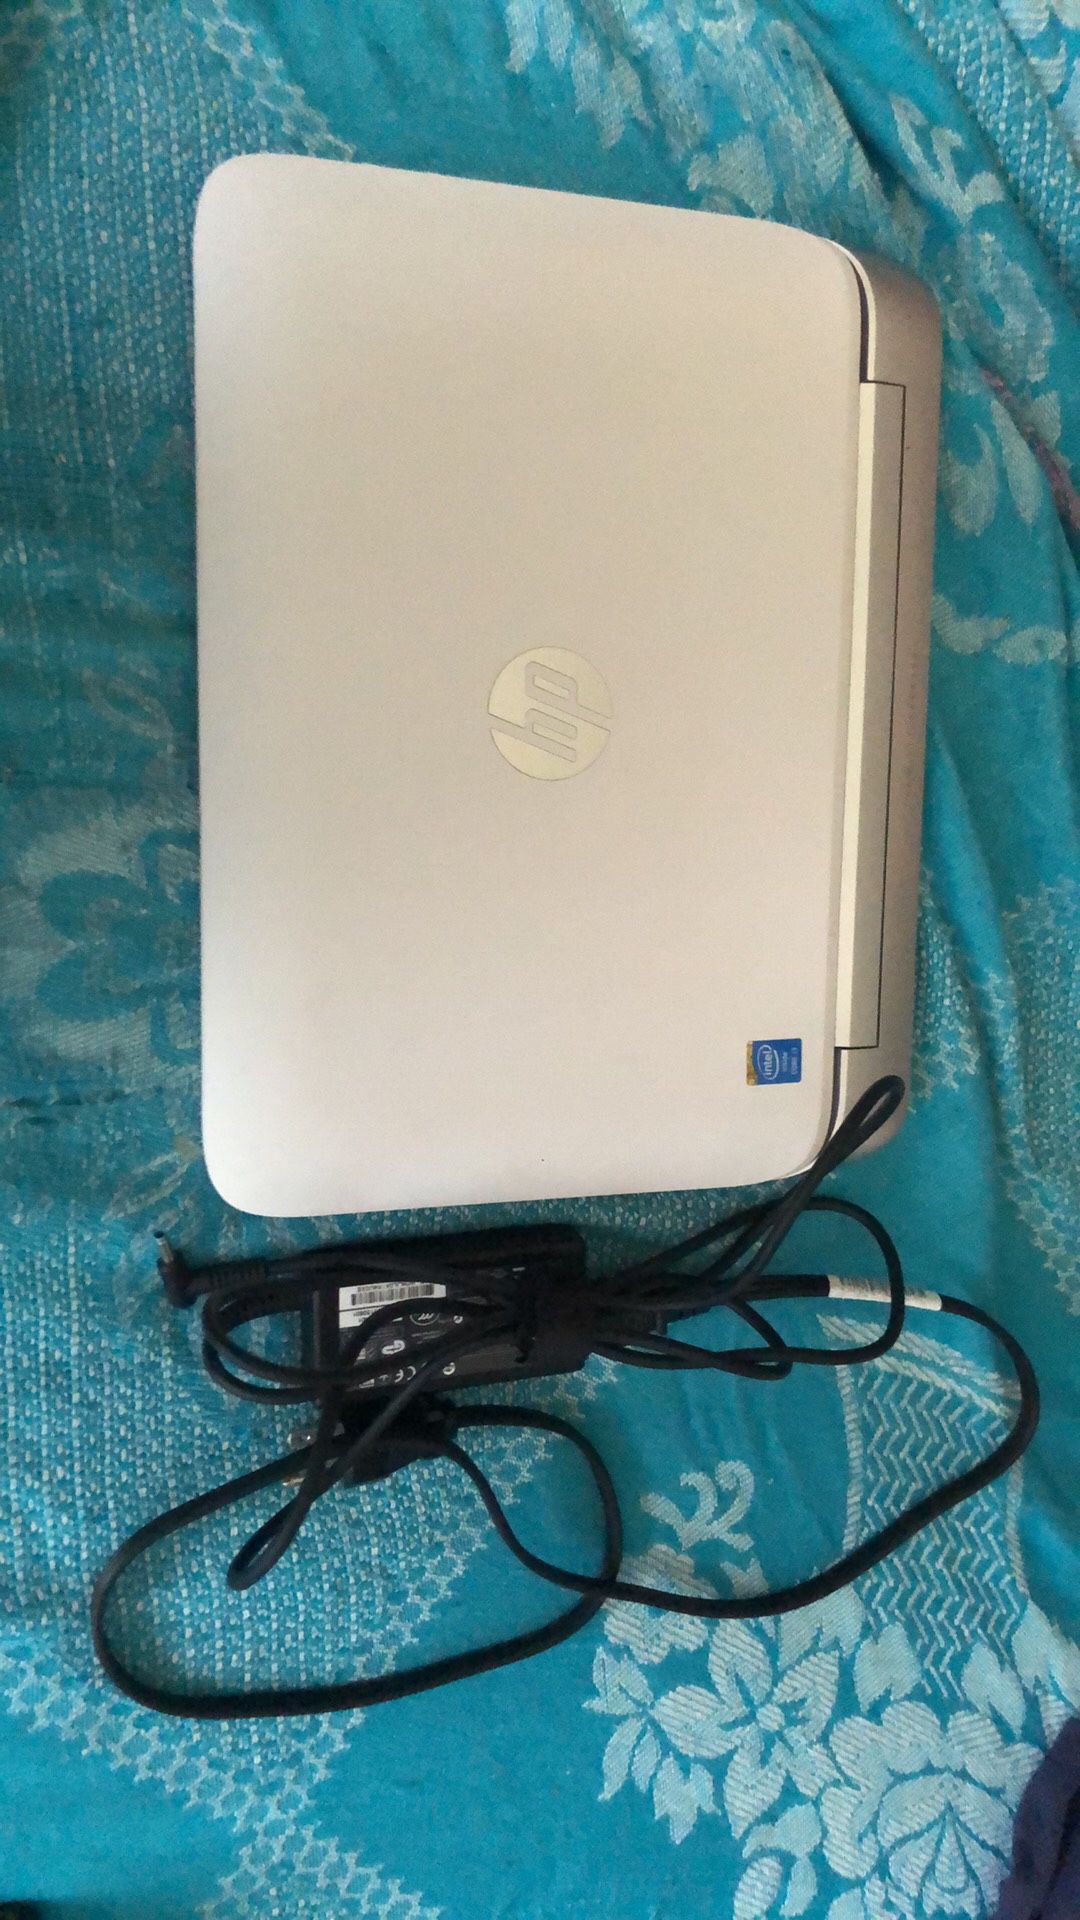 HP Split Laptop w/ Beats Audio, Windows 10, White, Good Condition